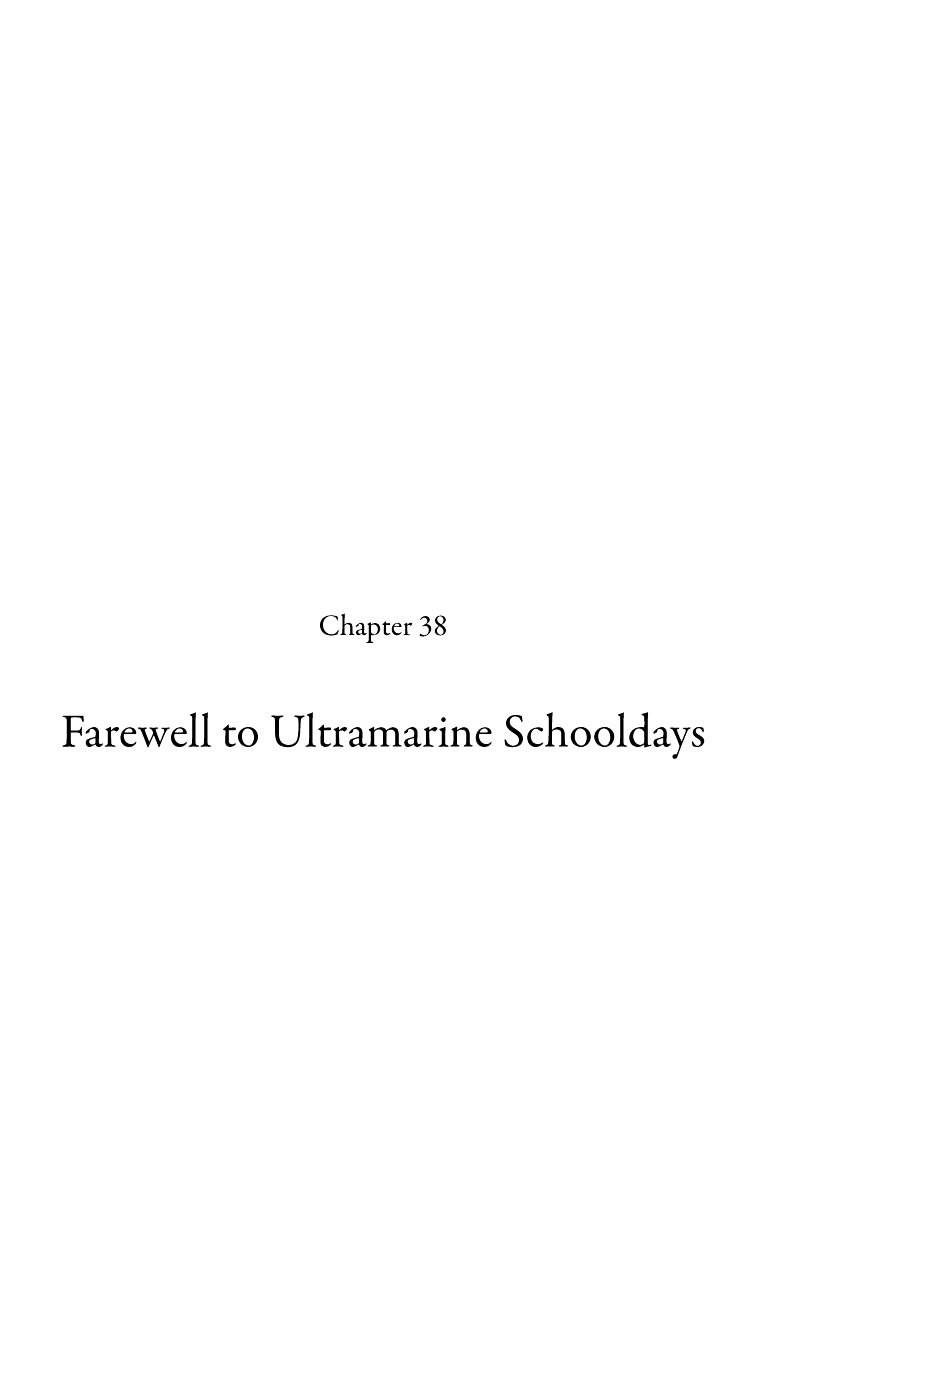 Gunjou Gakusha Vol.4 Chapter 38 [End] : Farewell To Ultramarine Schooldays - Picture 2